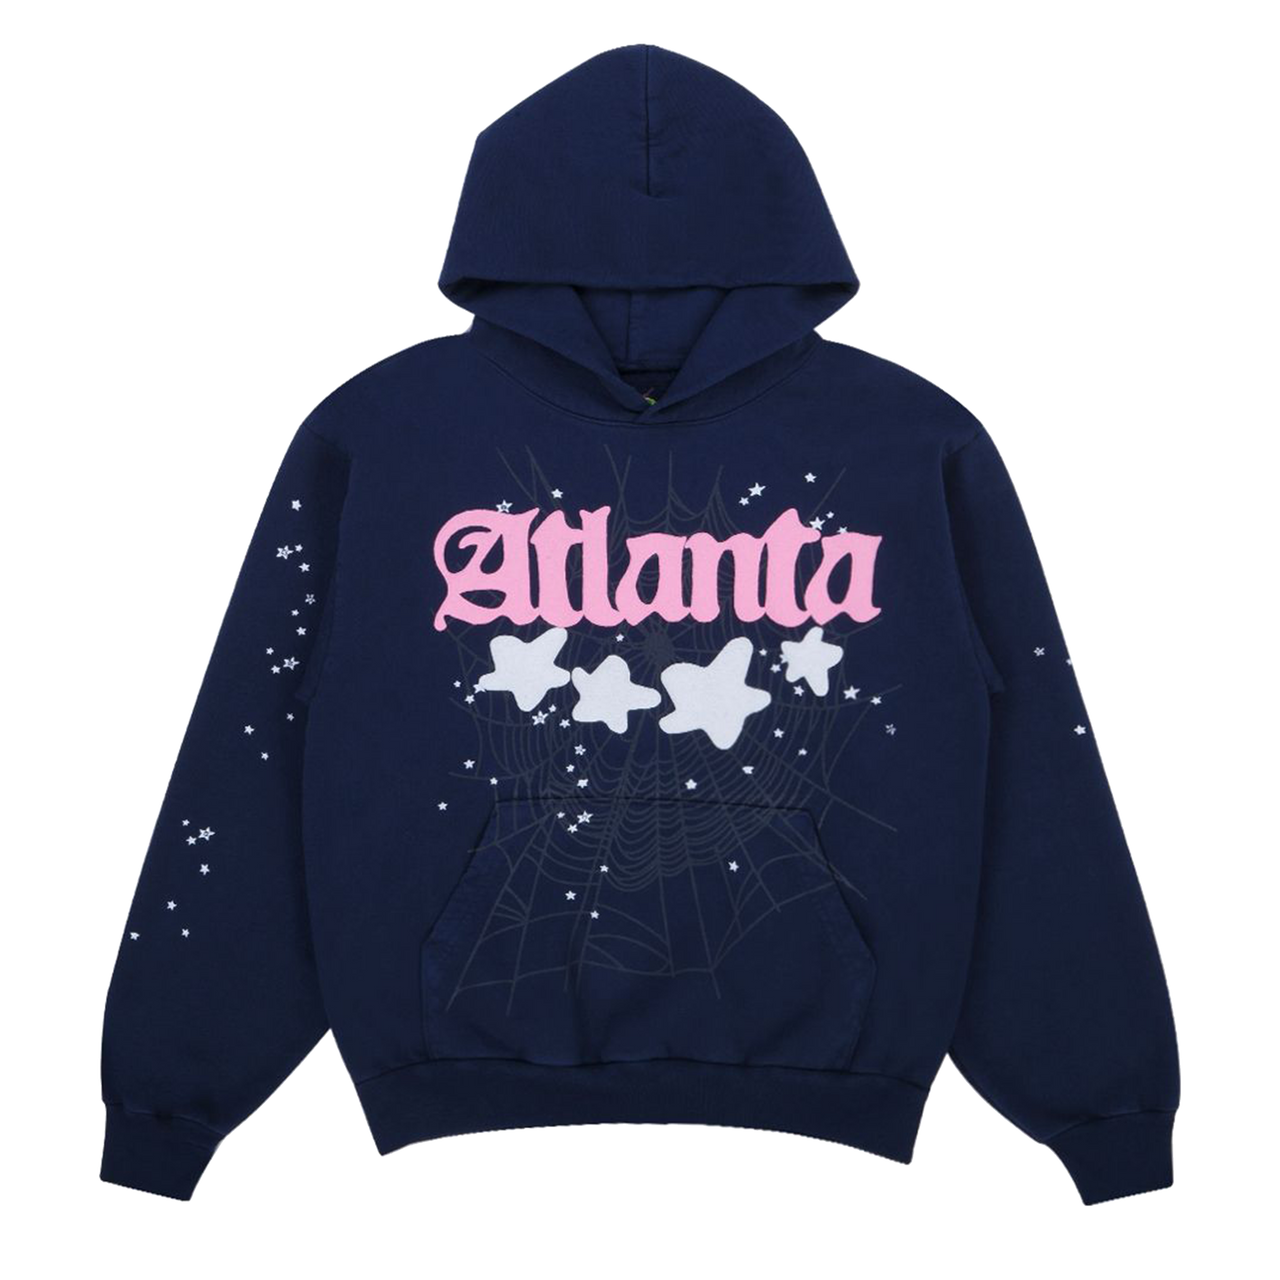 Sp5der Worldwide Atlanta Sweatshirt Navy